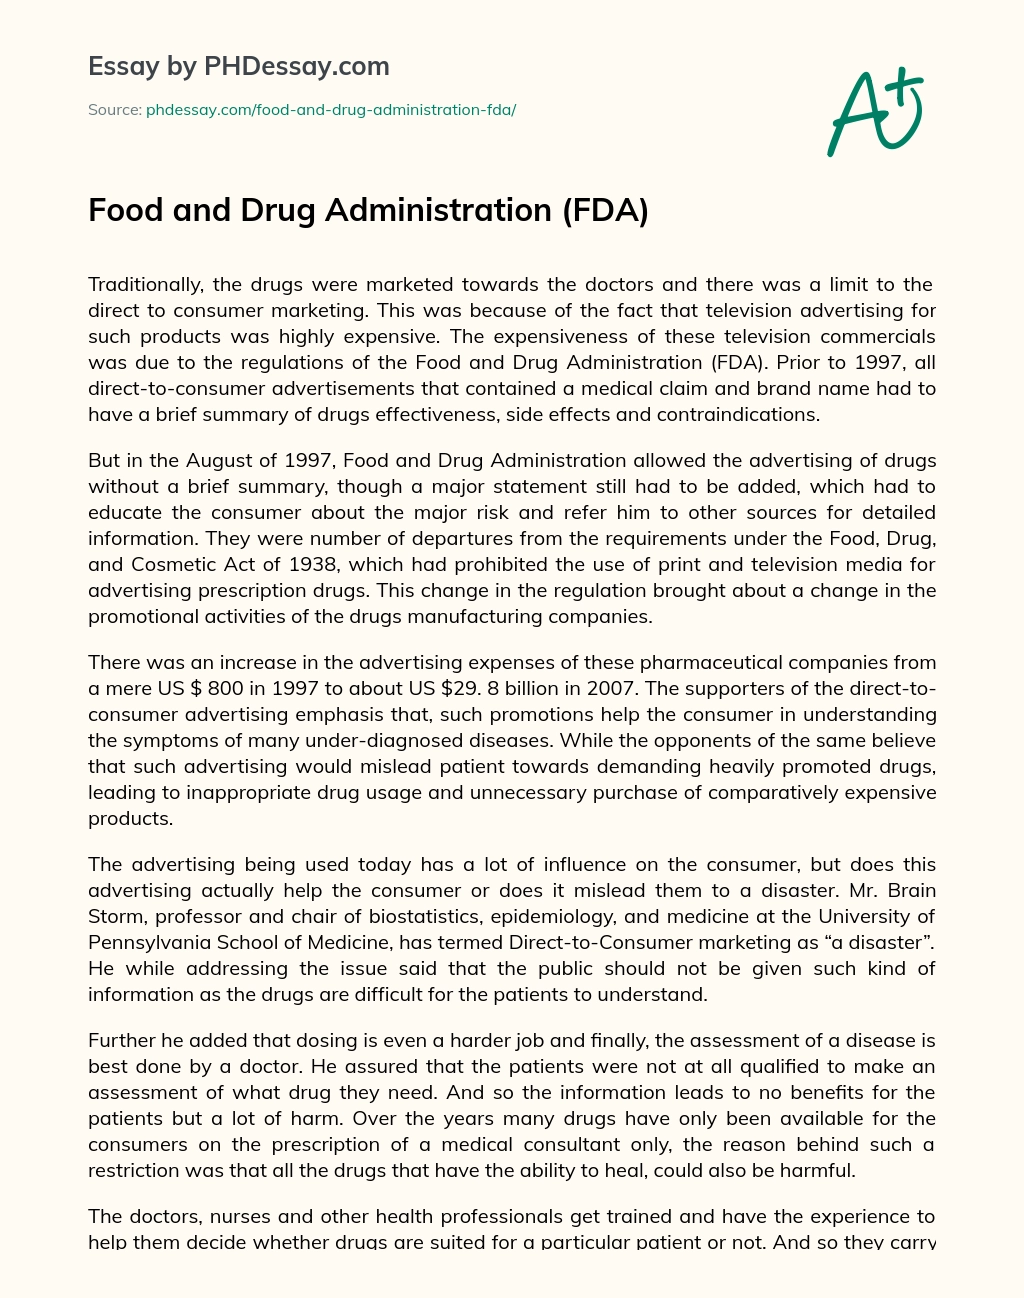 Food and Drug Administration (FDA) essay